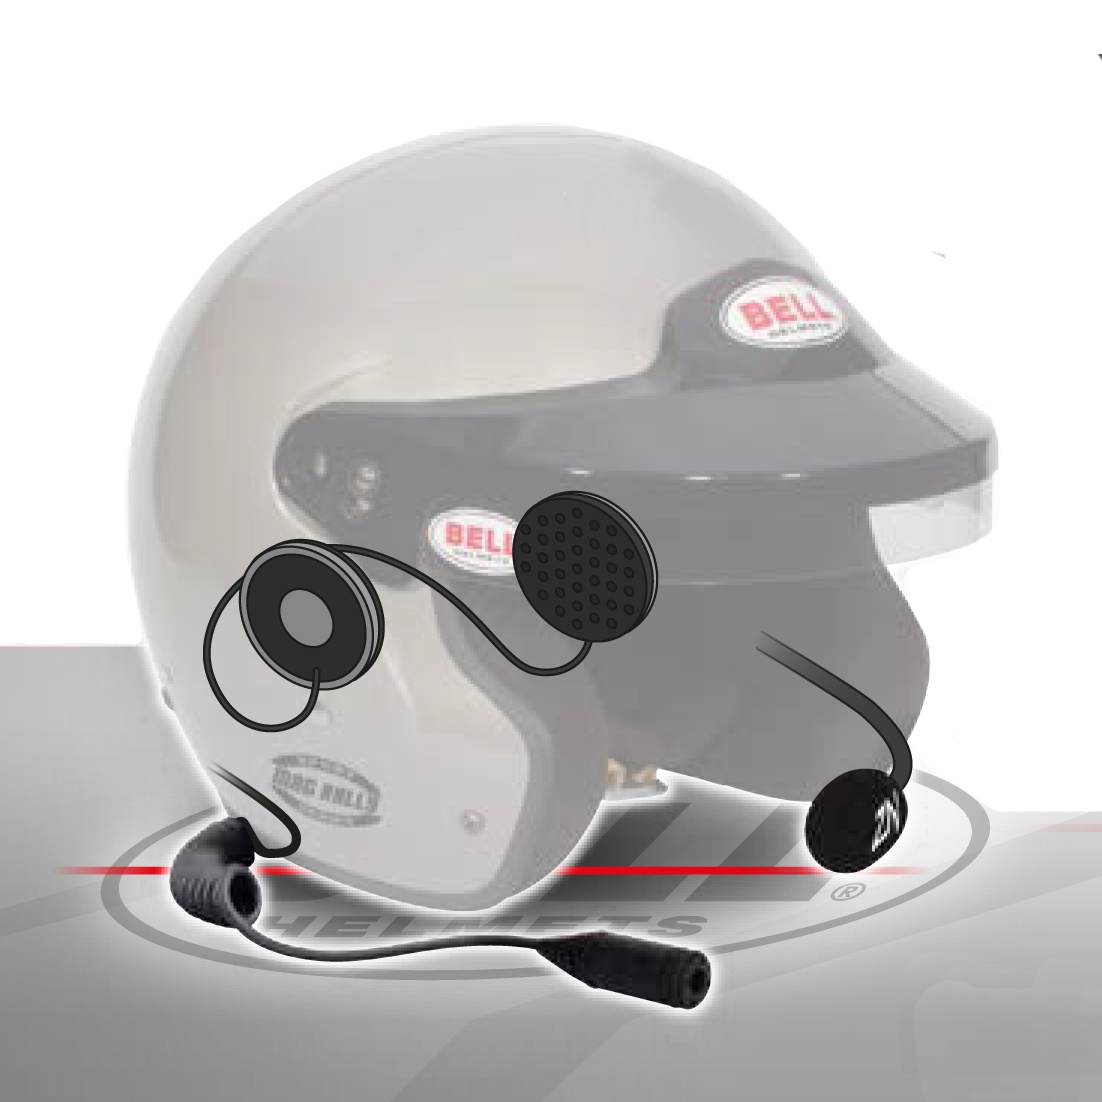 Kit interfono casco Jet nexus standard Peltor